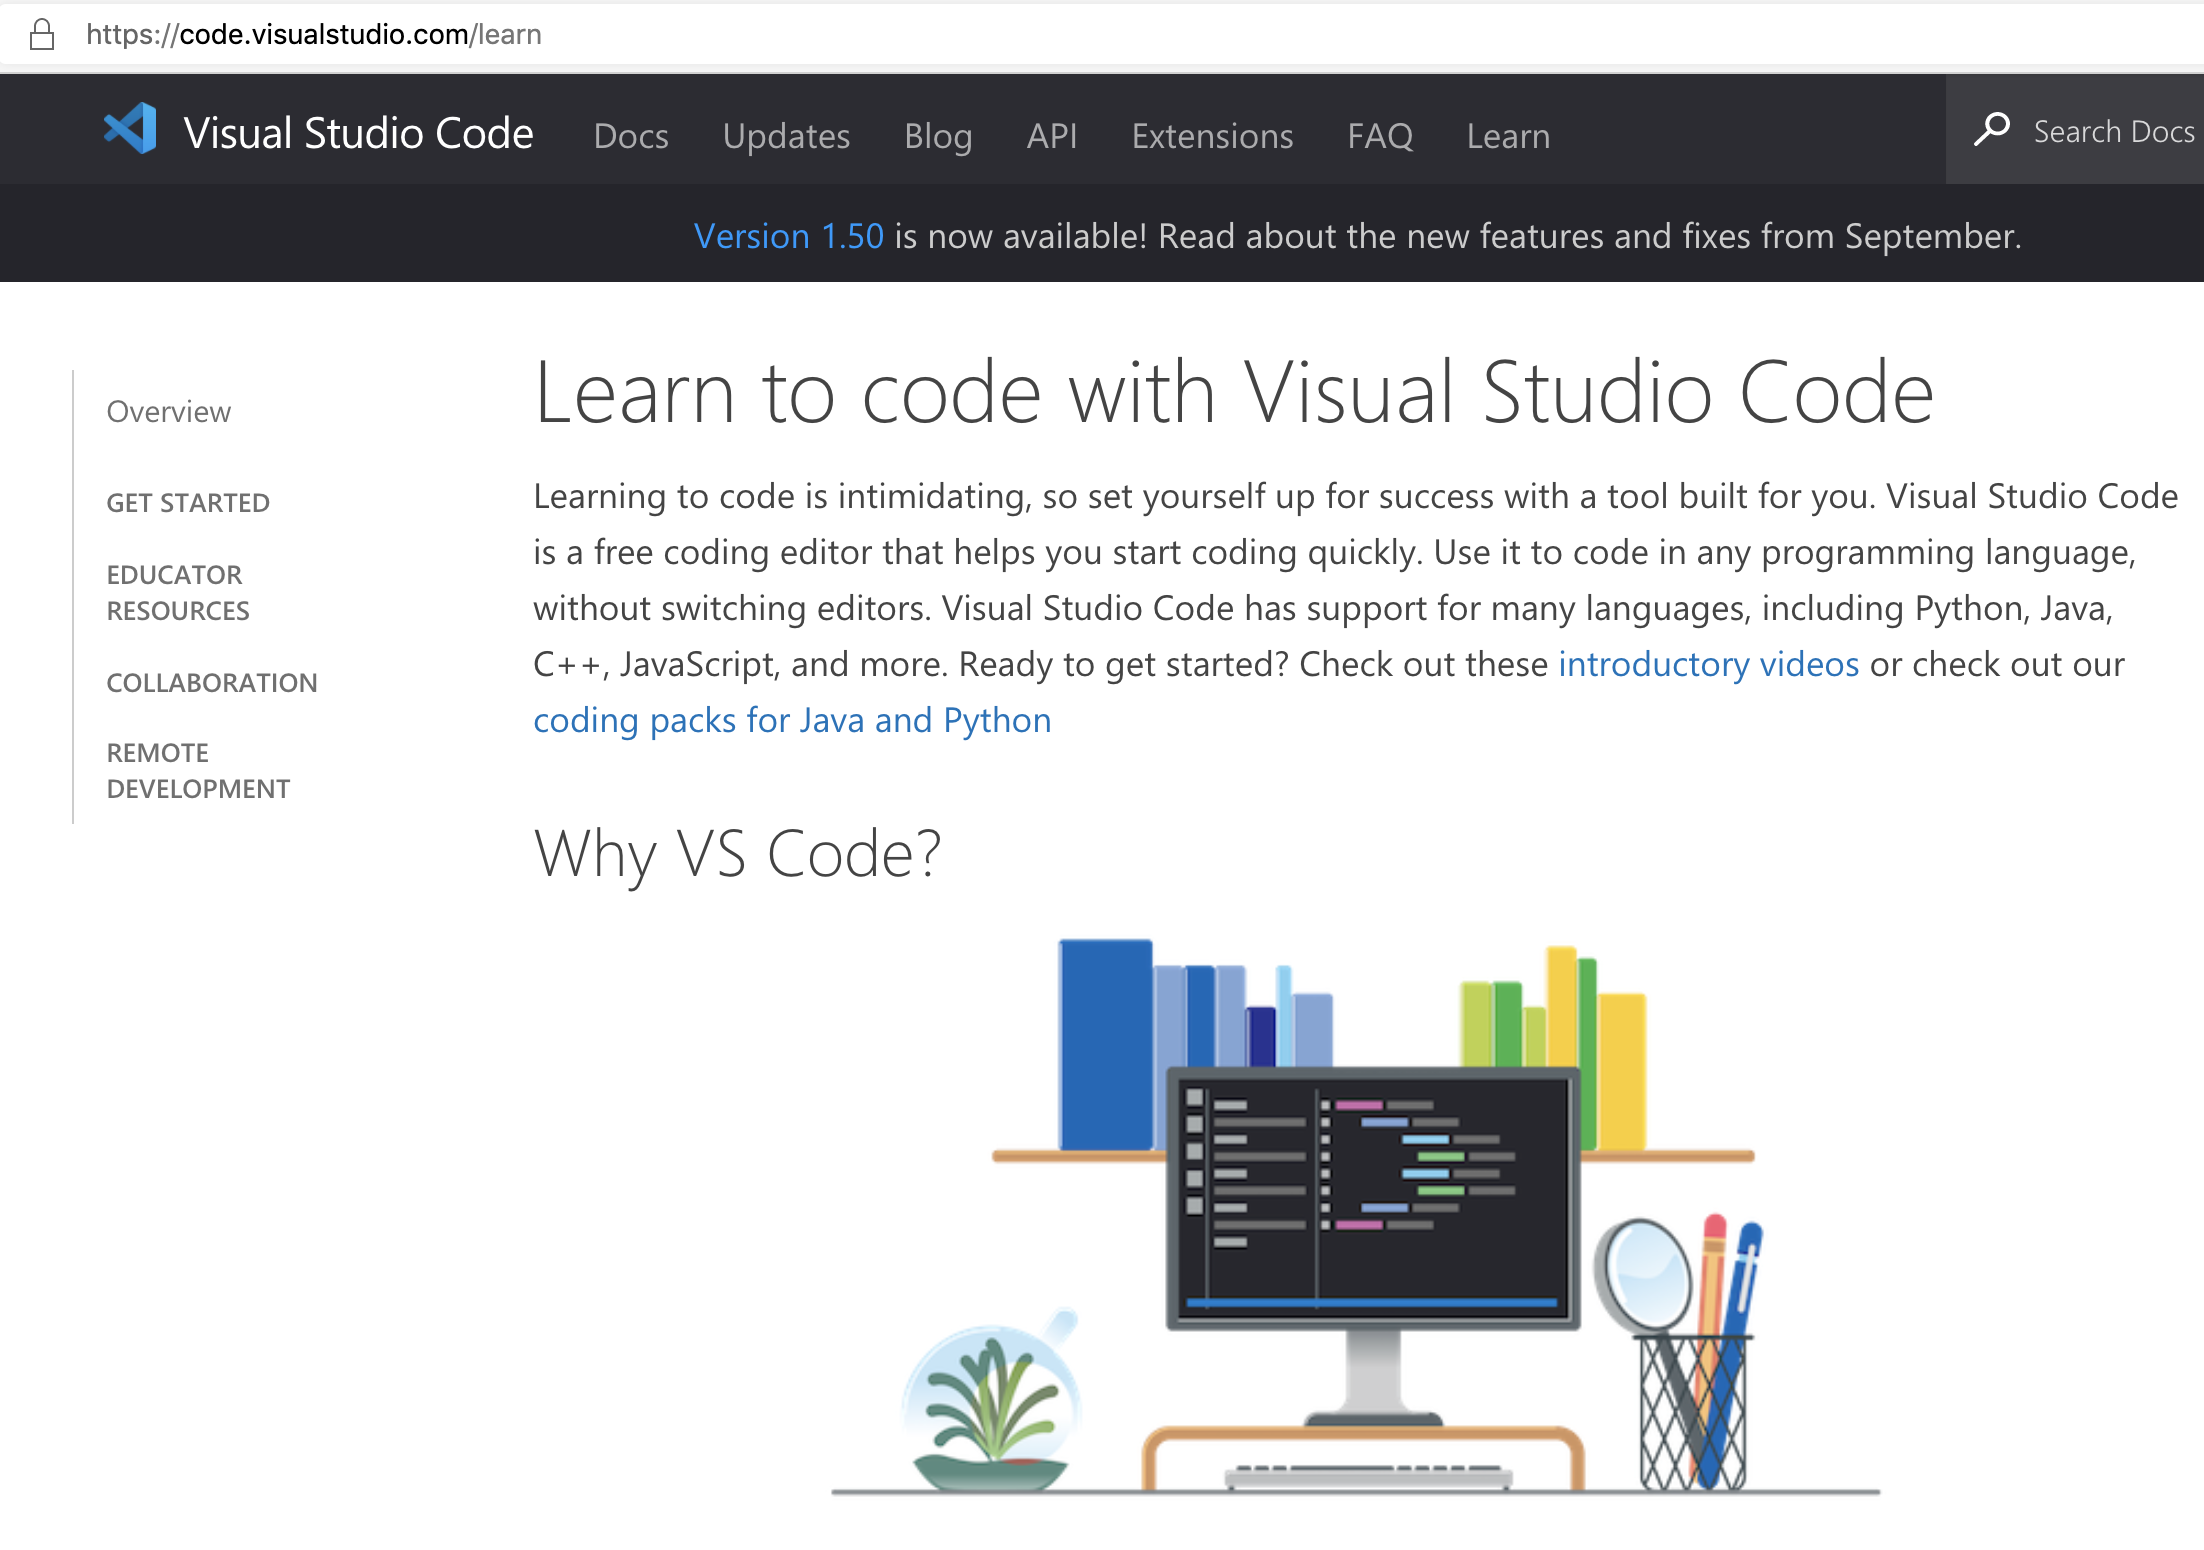 Visual Studio Code 1.51 发布